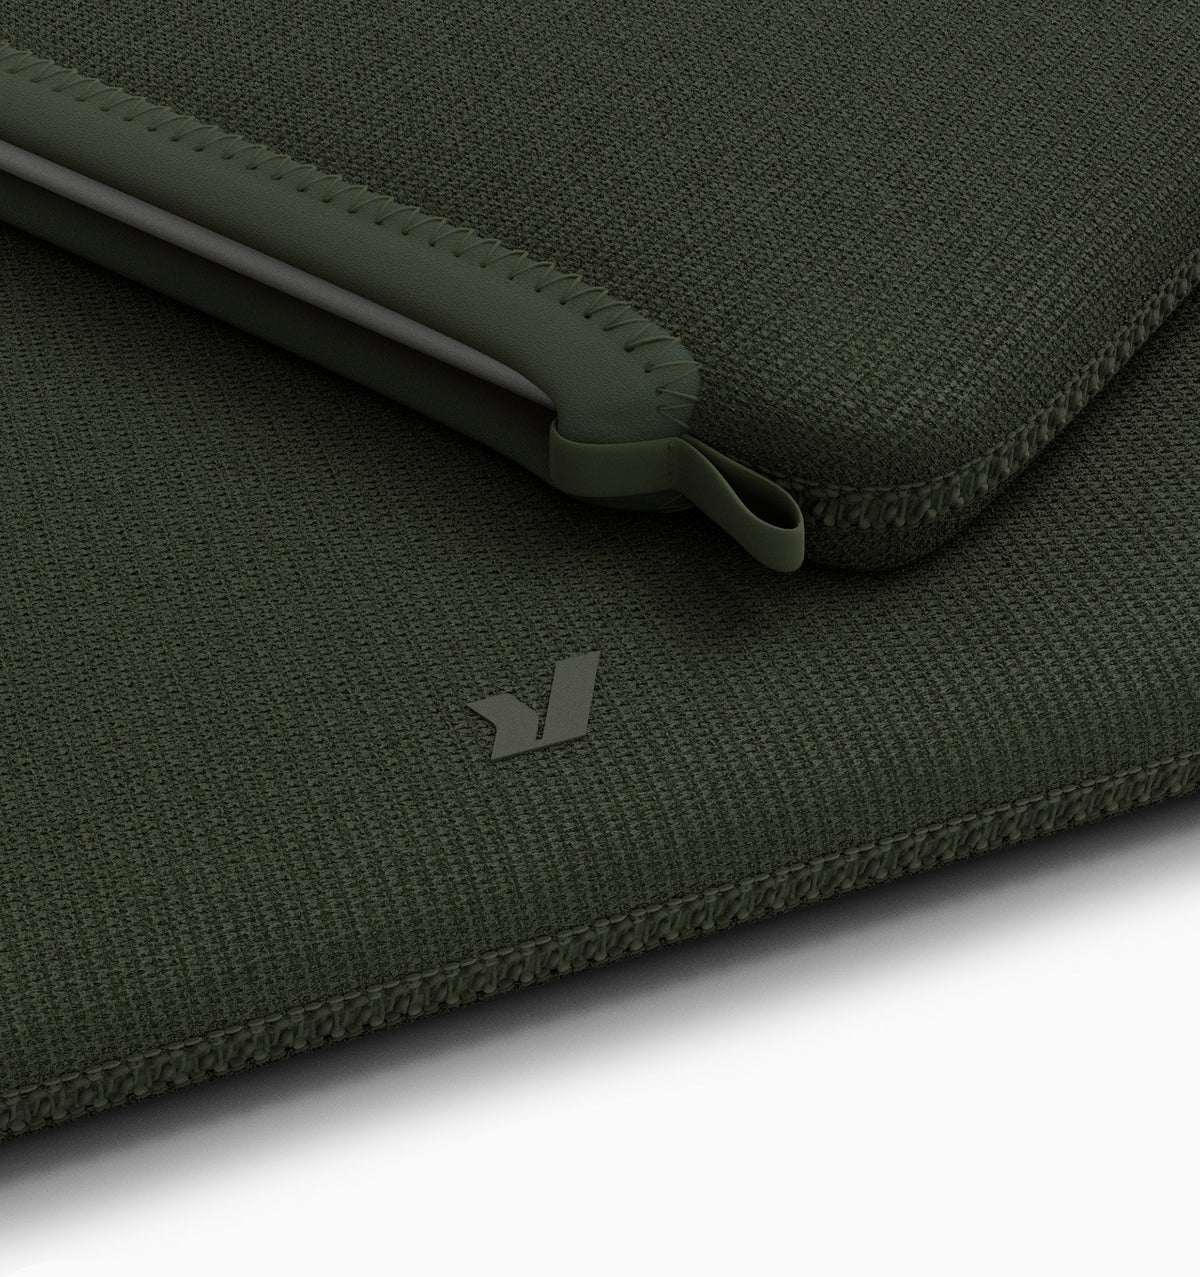 Rushfaster Laptop Sleeve For 13" MacBook Air - Green